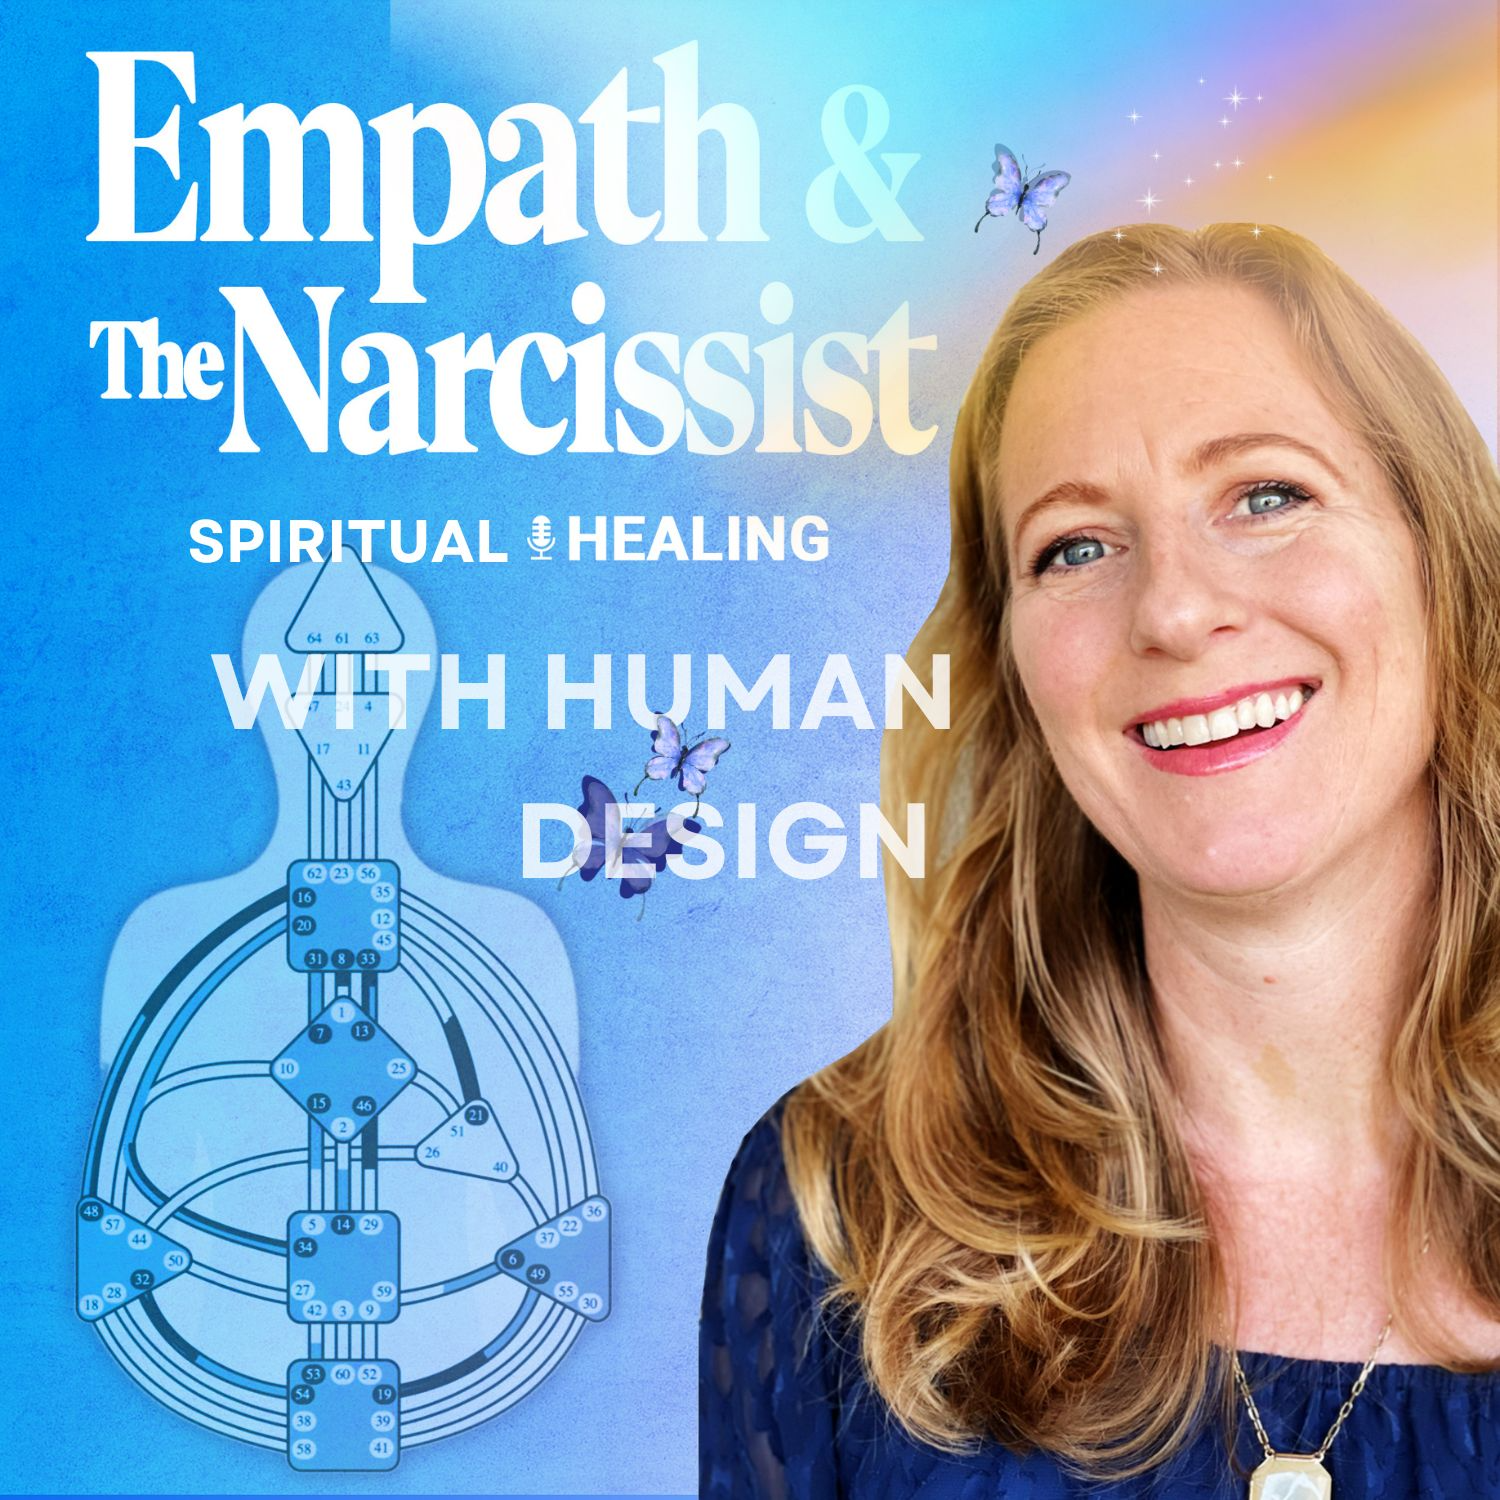 Empath & The Narcissist